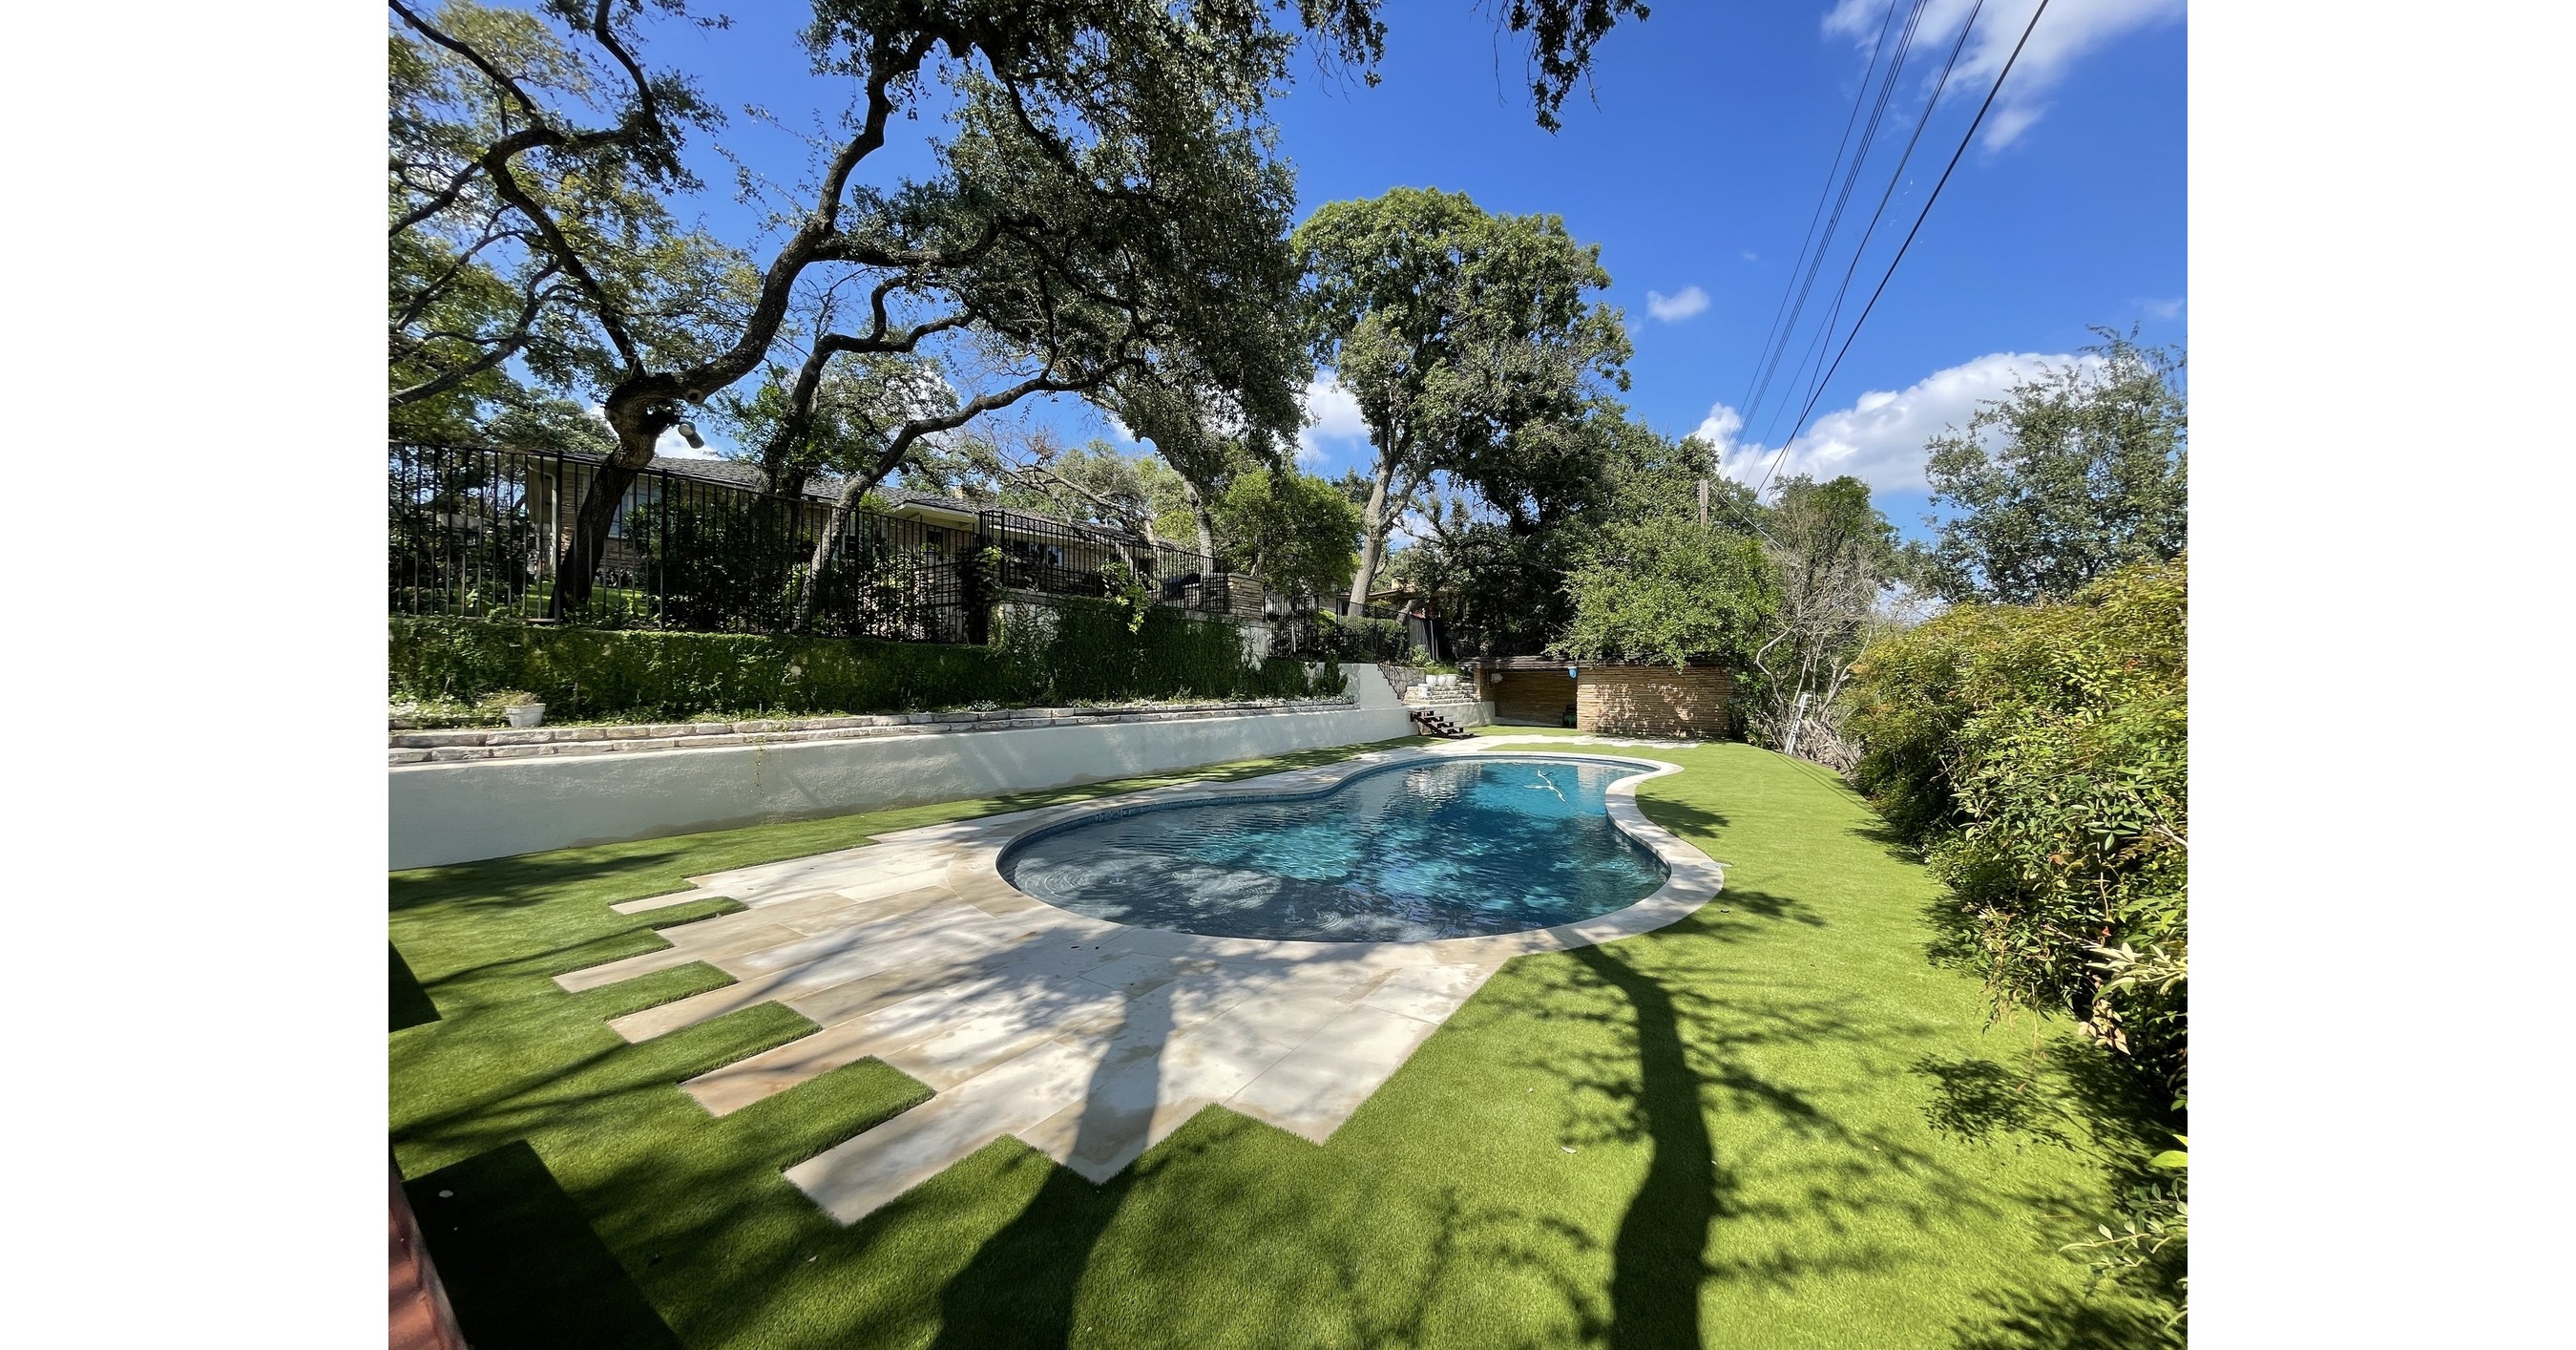 Austin, TX Artificial Grass Installation Creates Family-Friendly Paradise